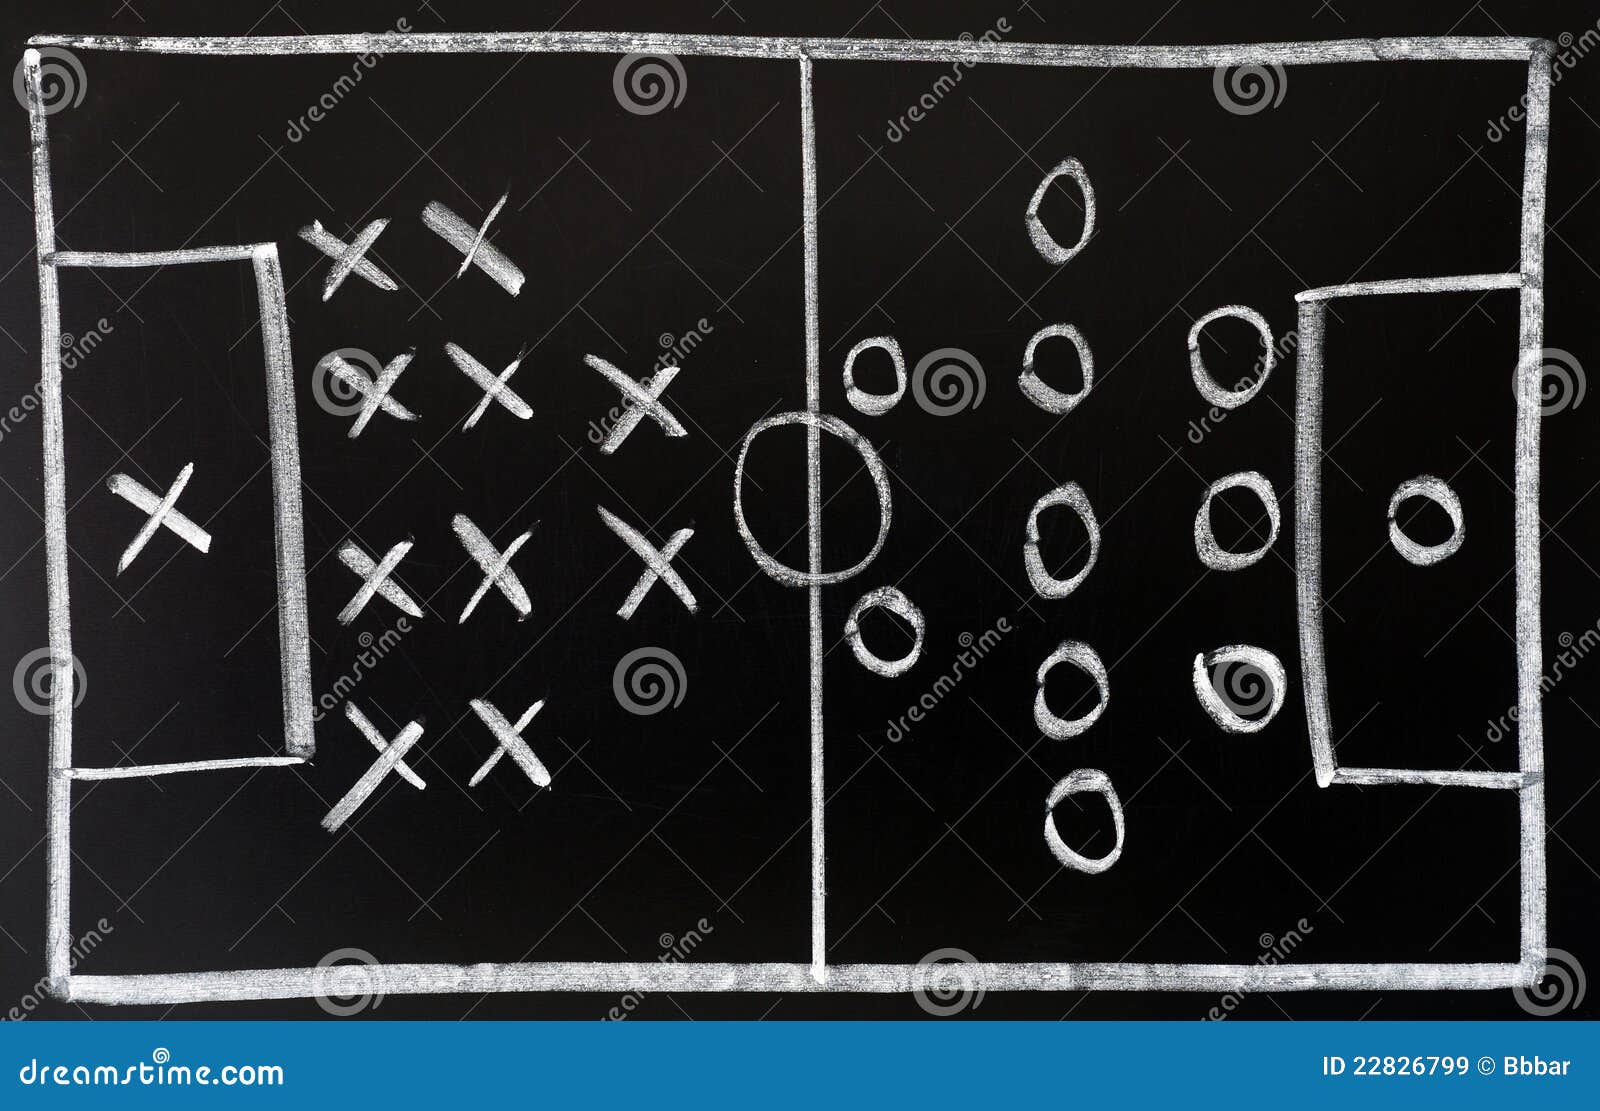 soccer formation tactics